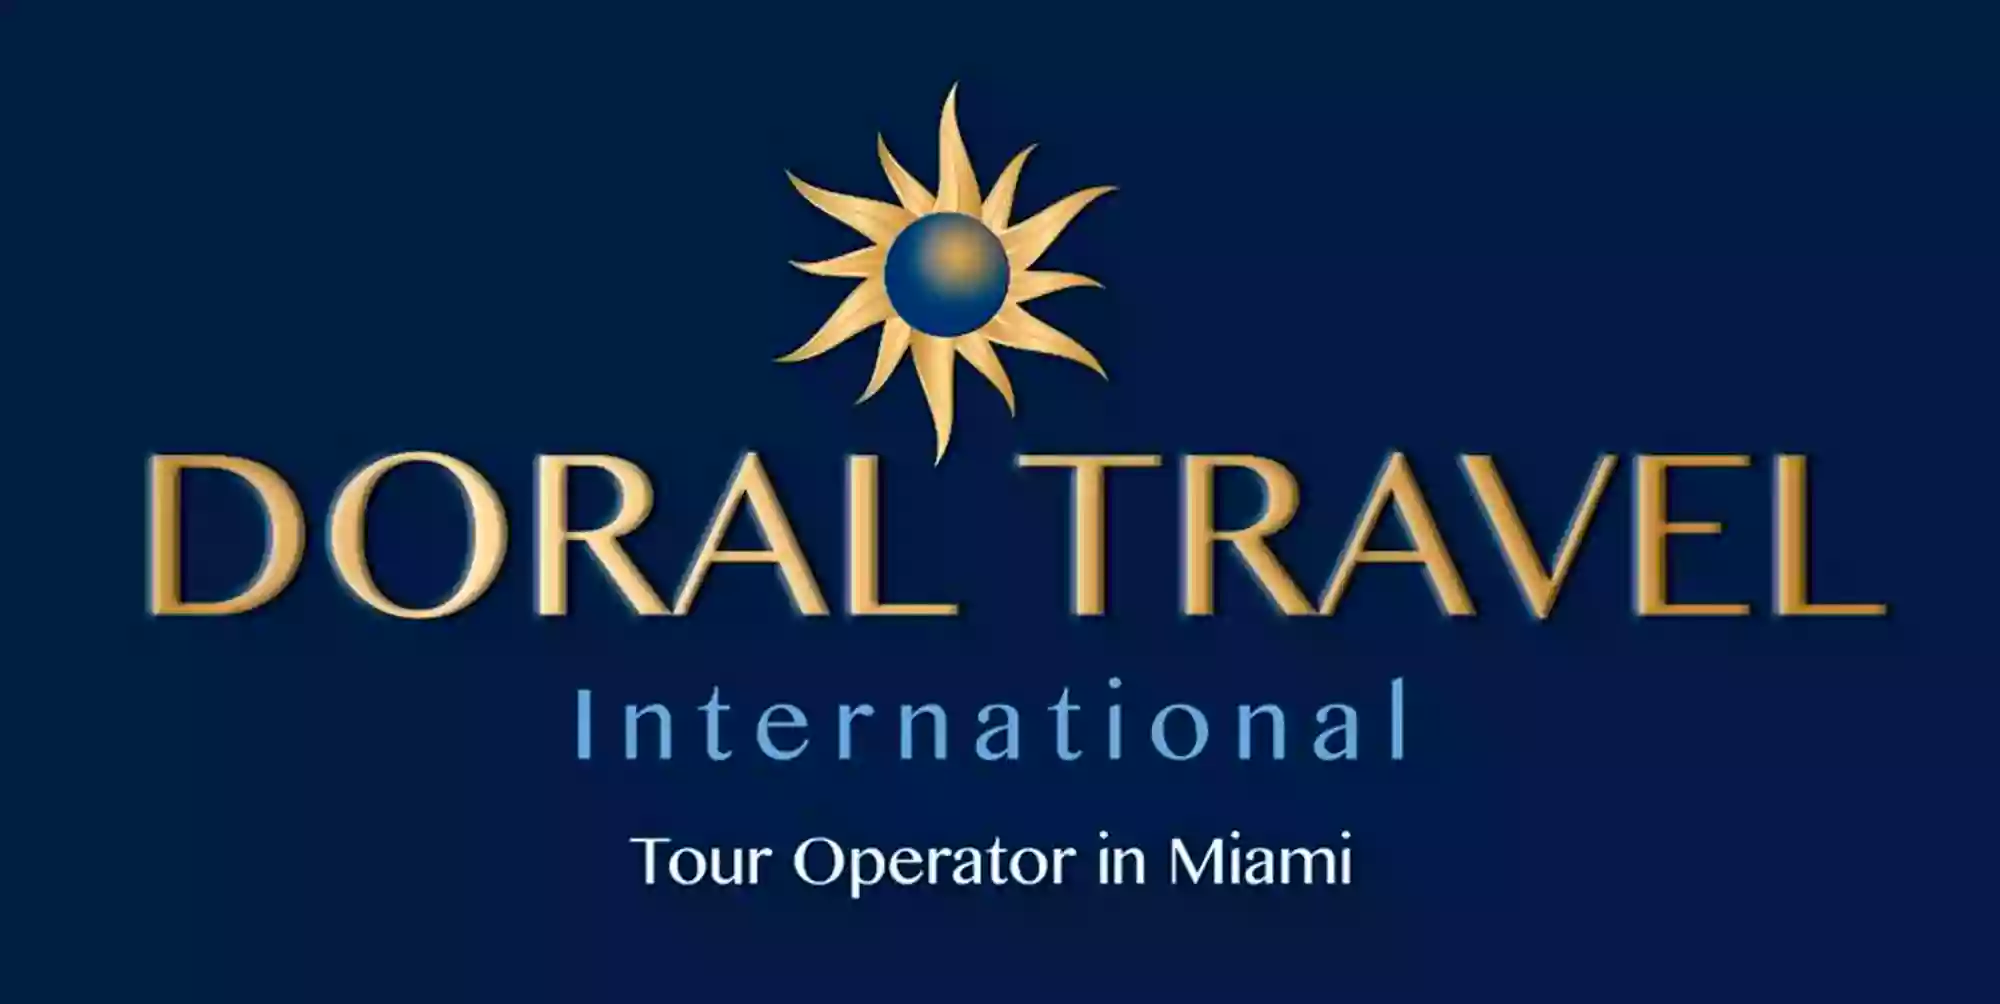 Doral Travel International in Miami